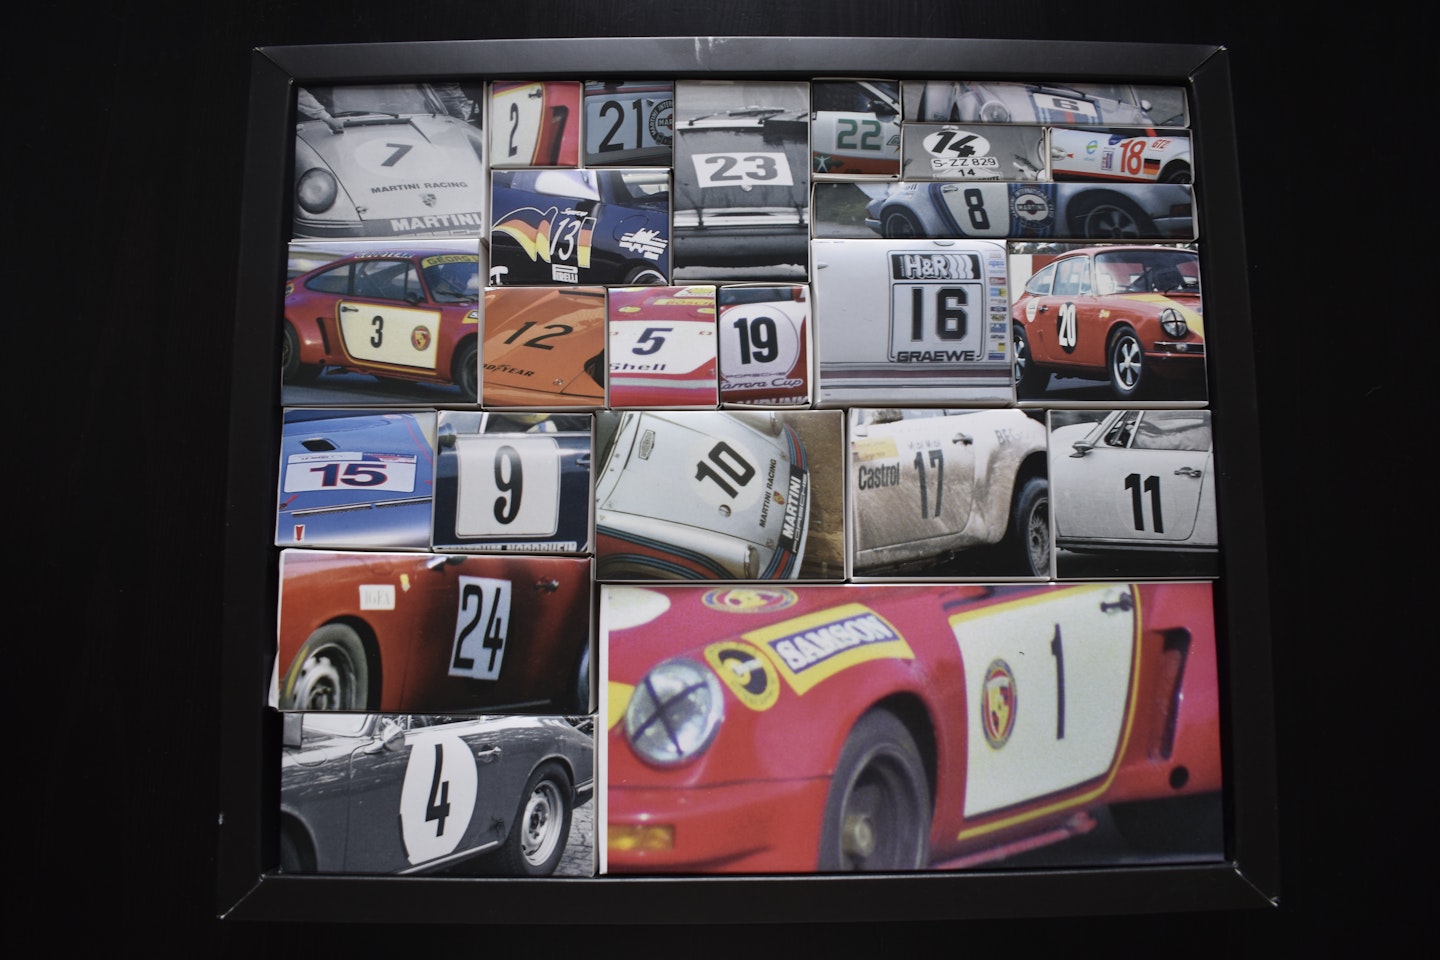 The inside of the Porsche 911 advent calendar 